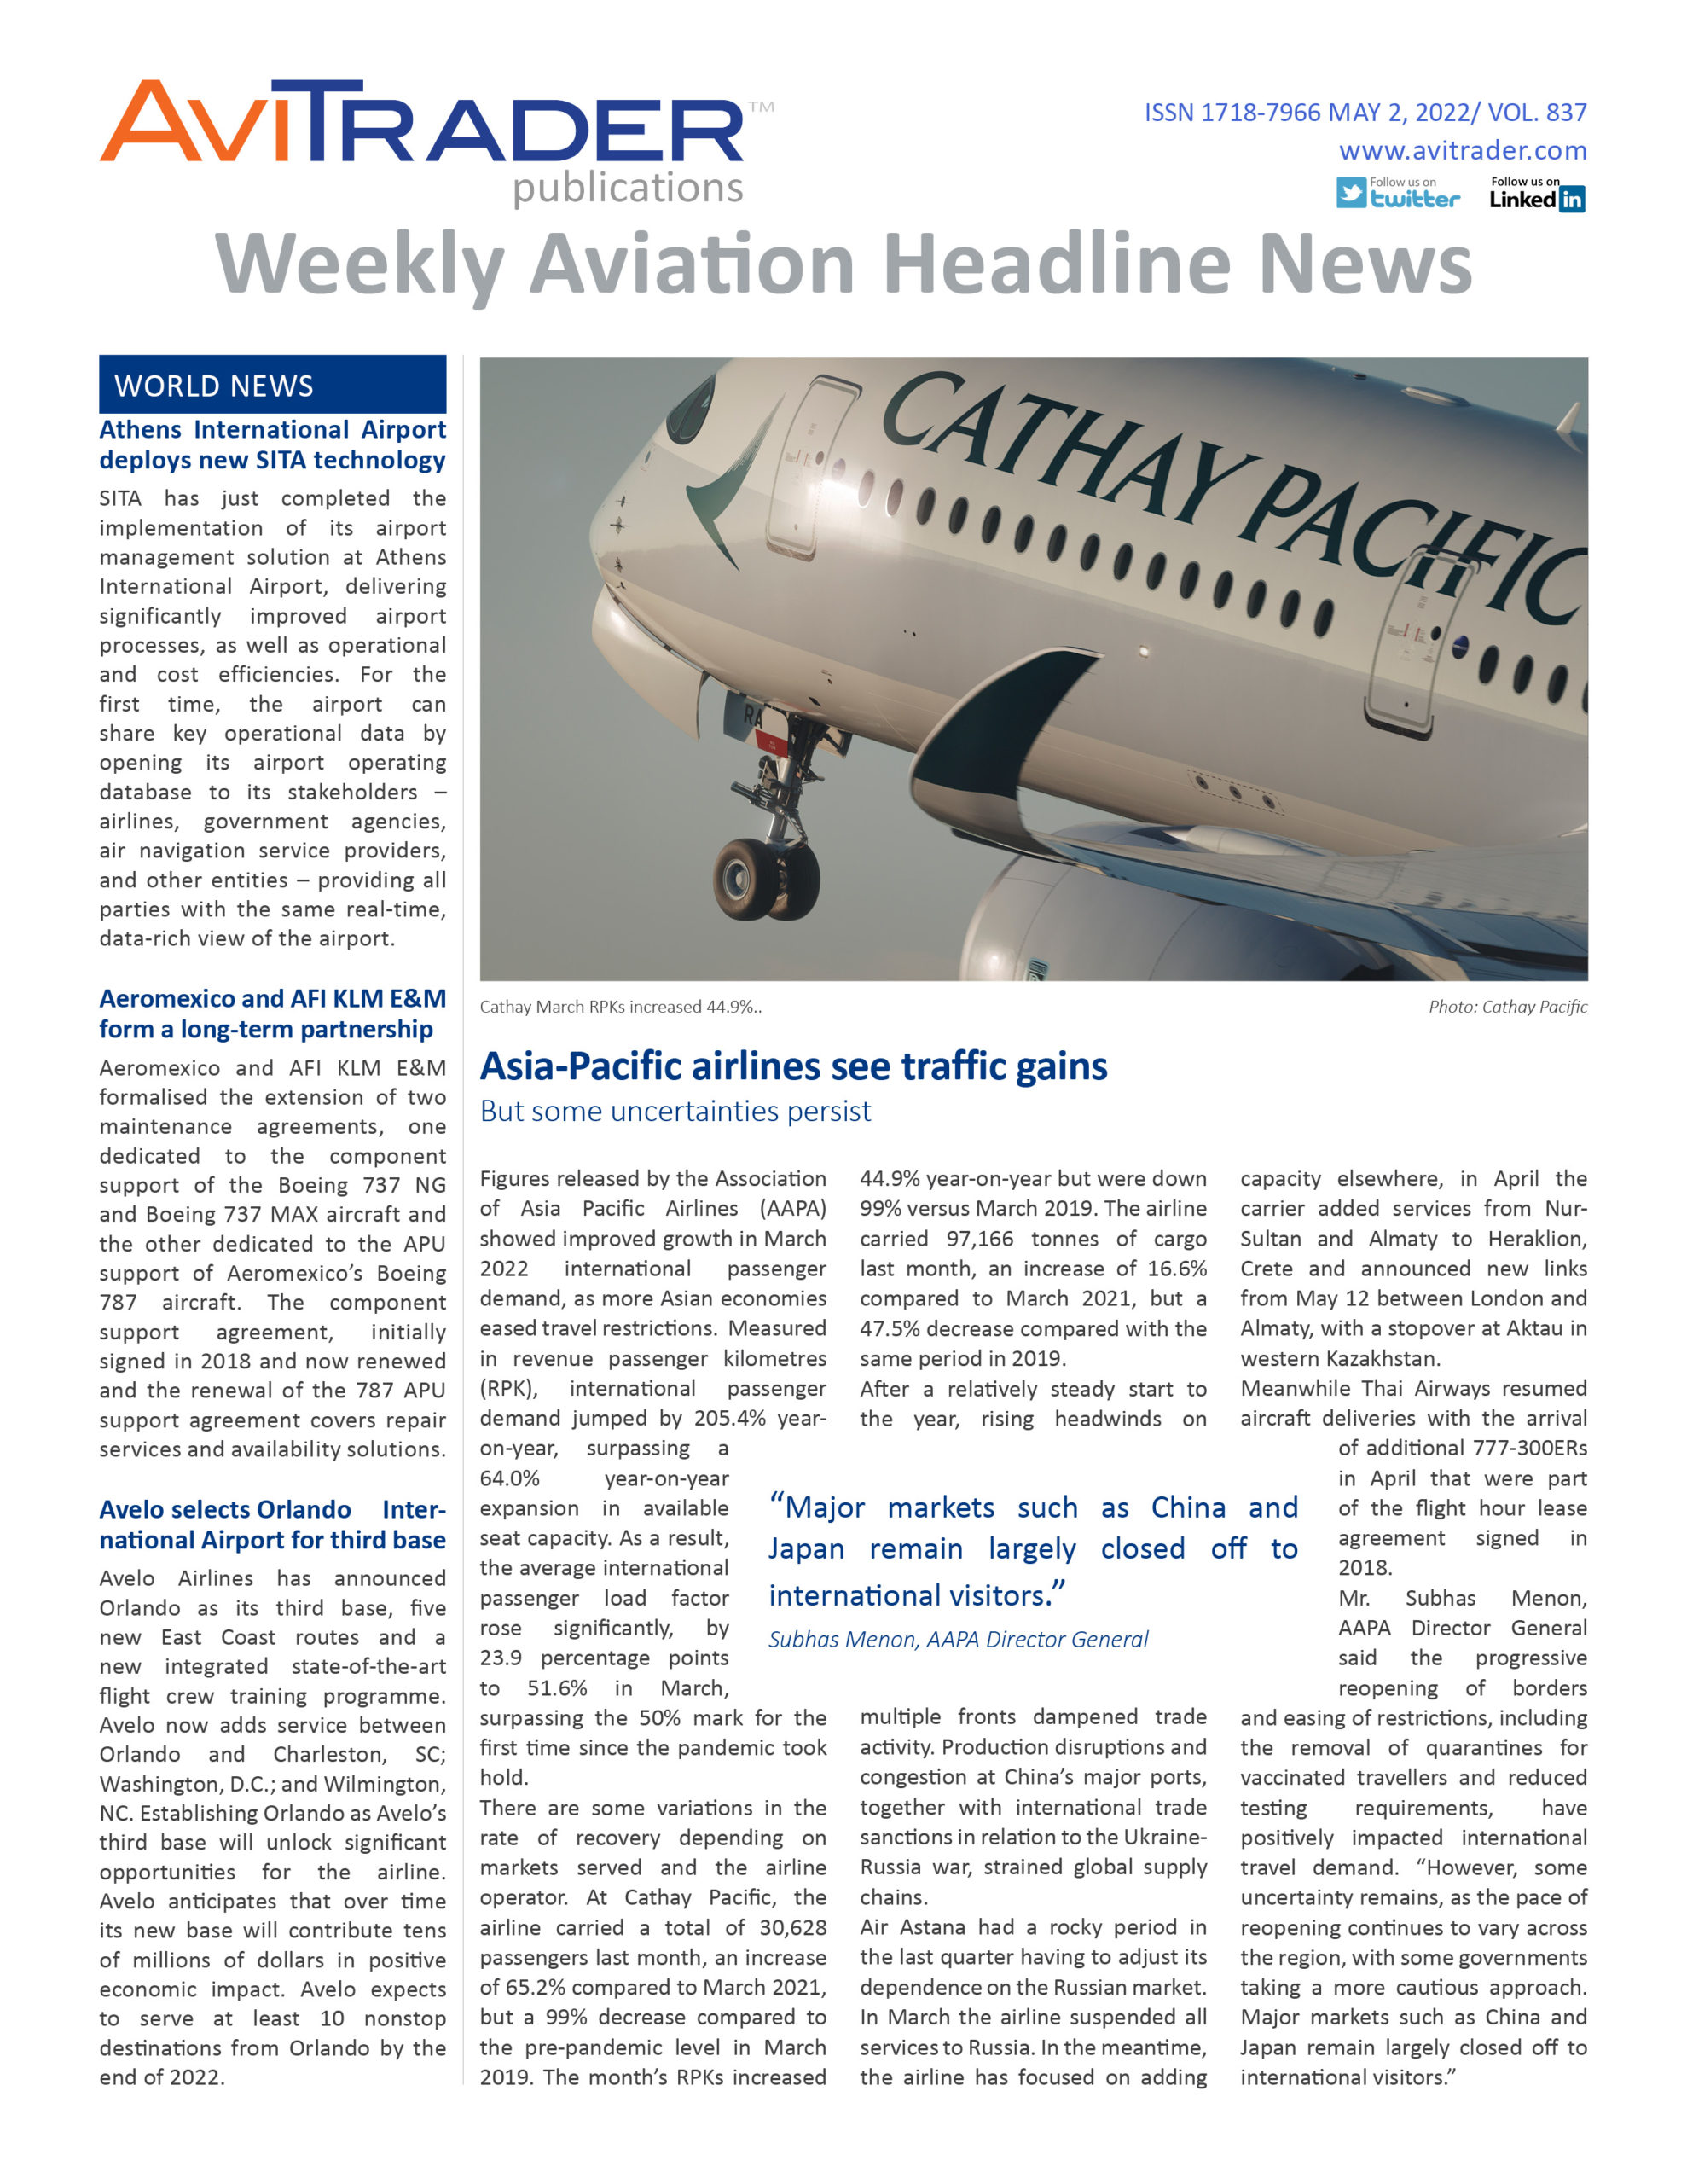 AviTrader_Weekly_Headline_News_Cover_2022-05-02